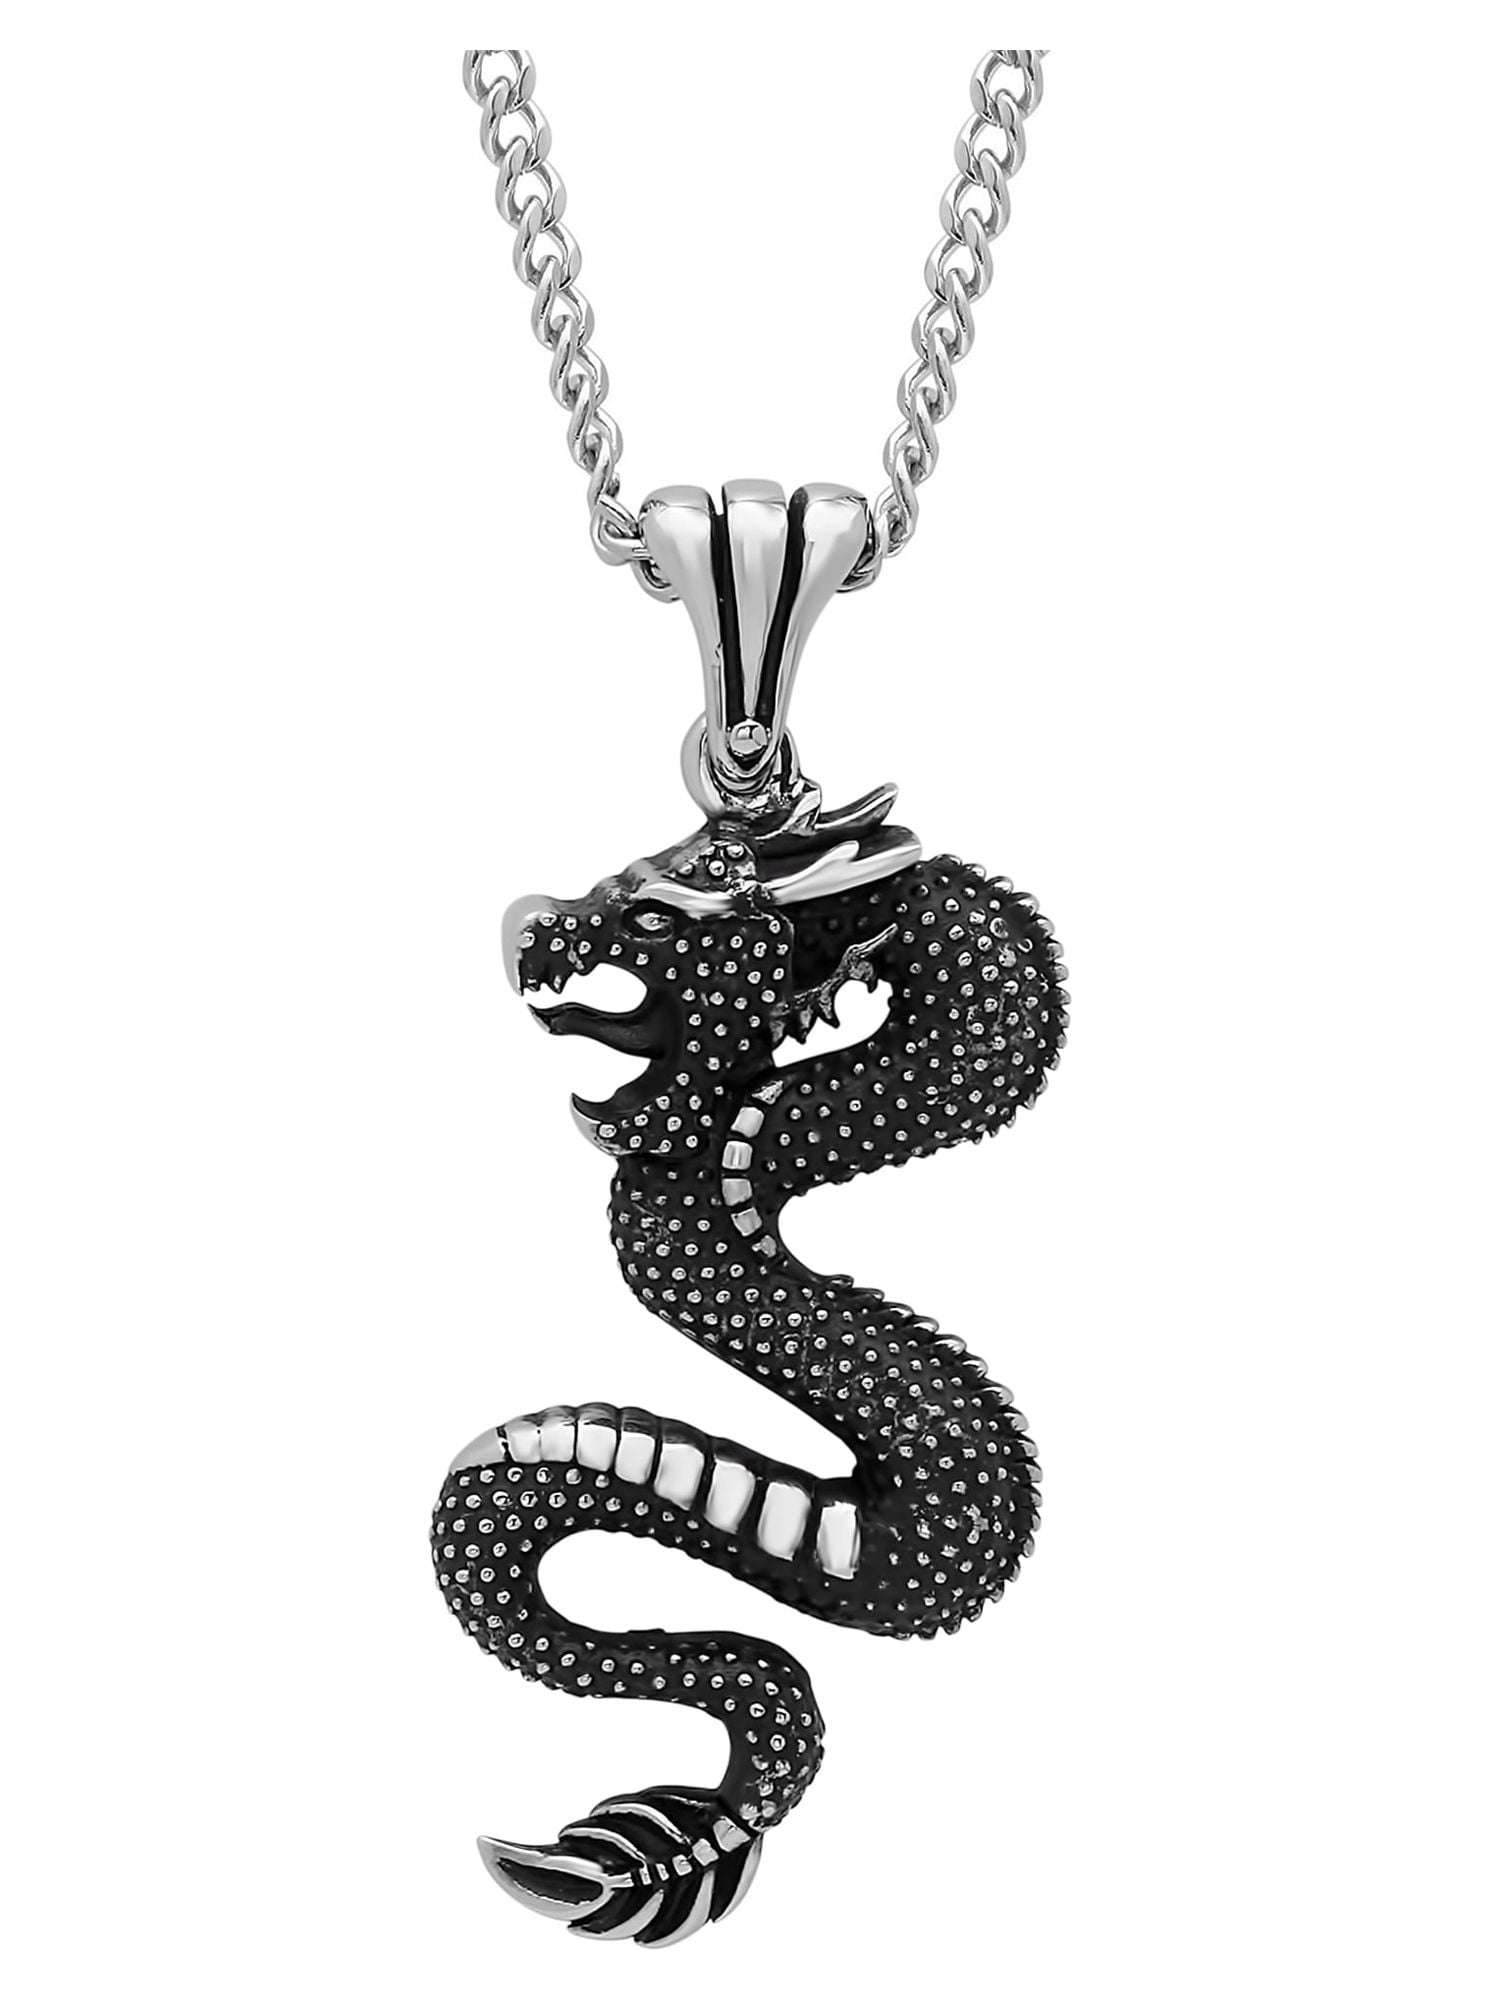 Black 1.5'' Strange music dragon charms stainless steel Pendant